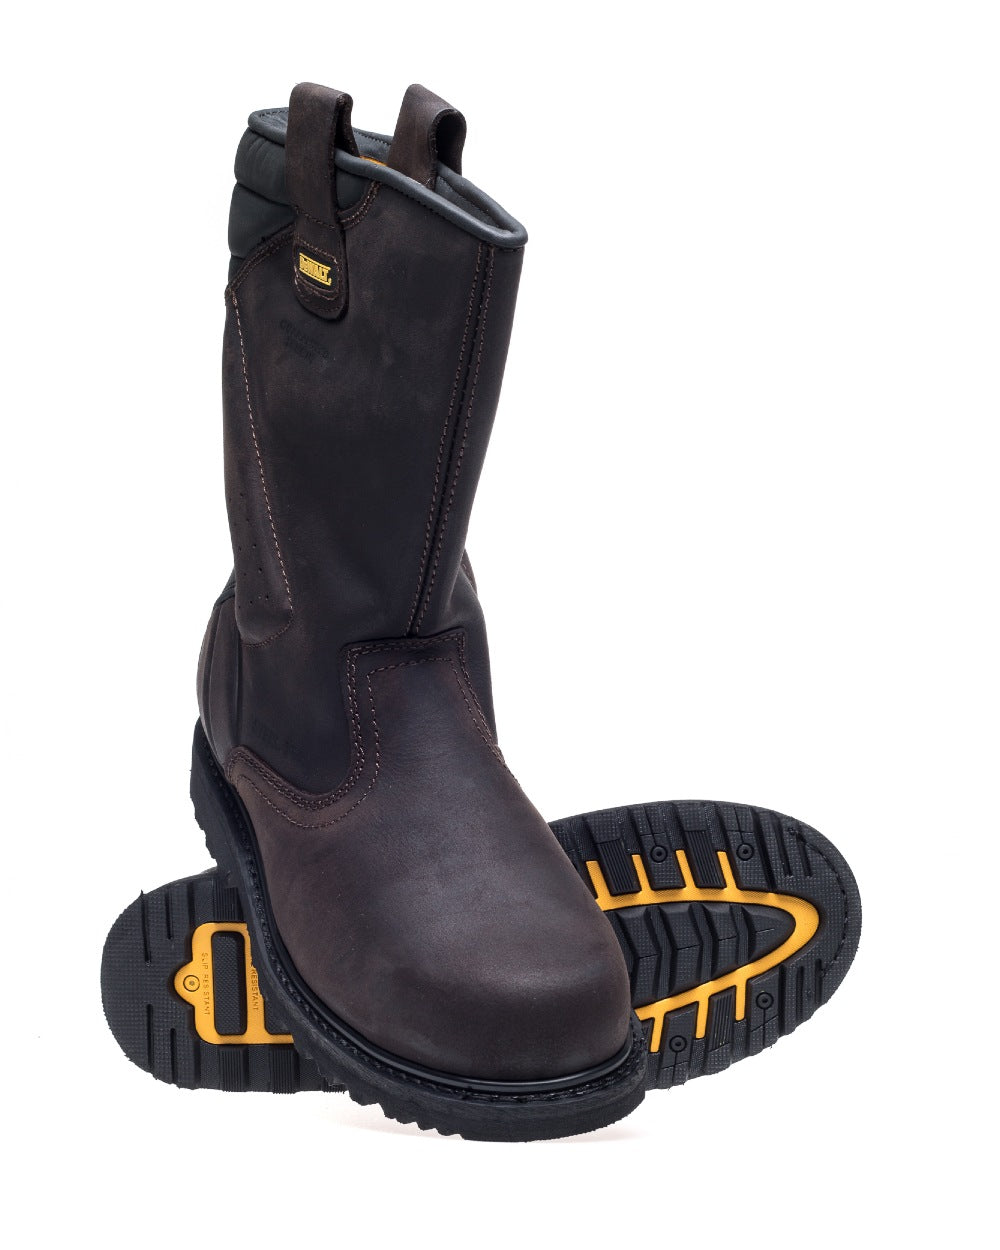 DeWalt Rigger Boot Safety Boots in Brown